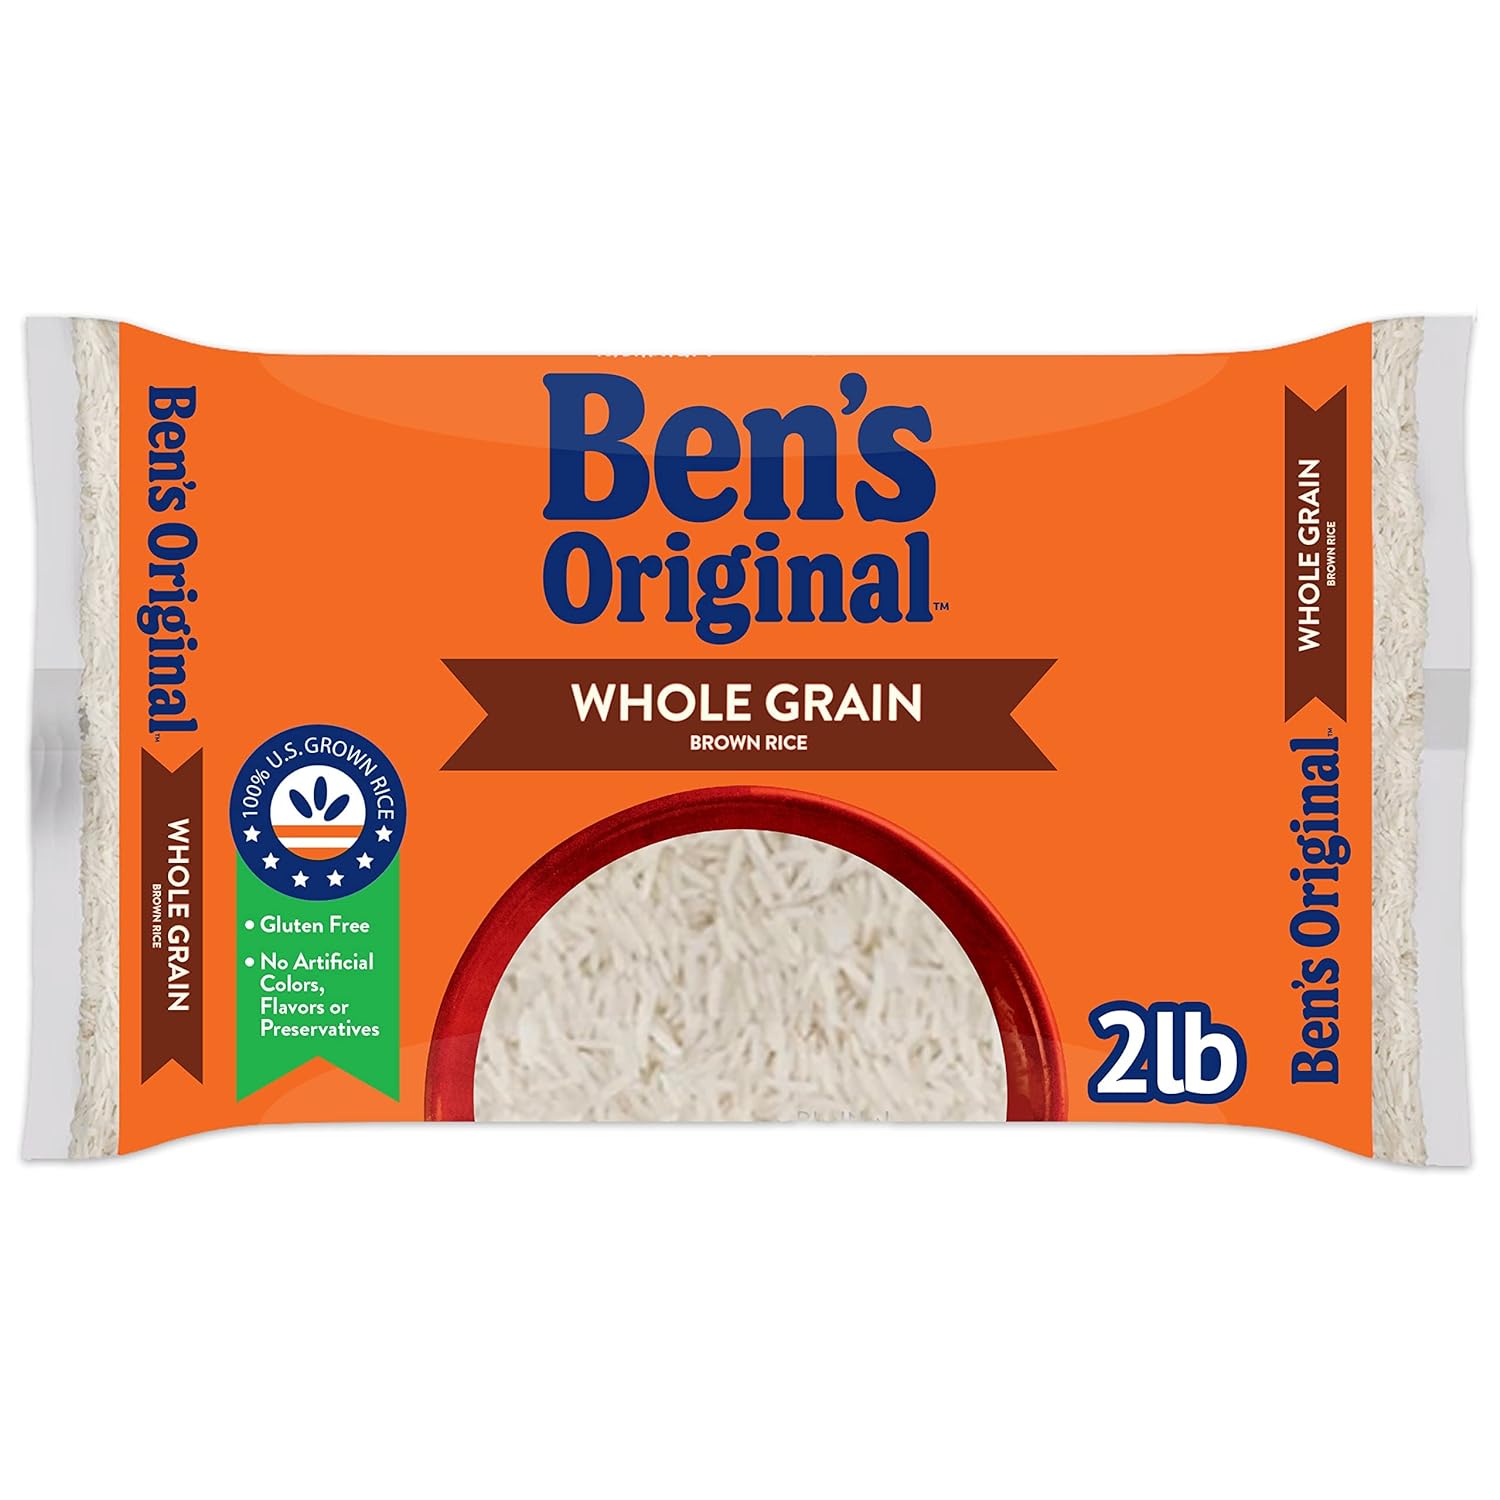 BEN'S ORIGINAL Whole Grain Brown Rice, 2 lb Bag